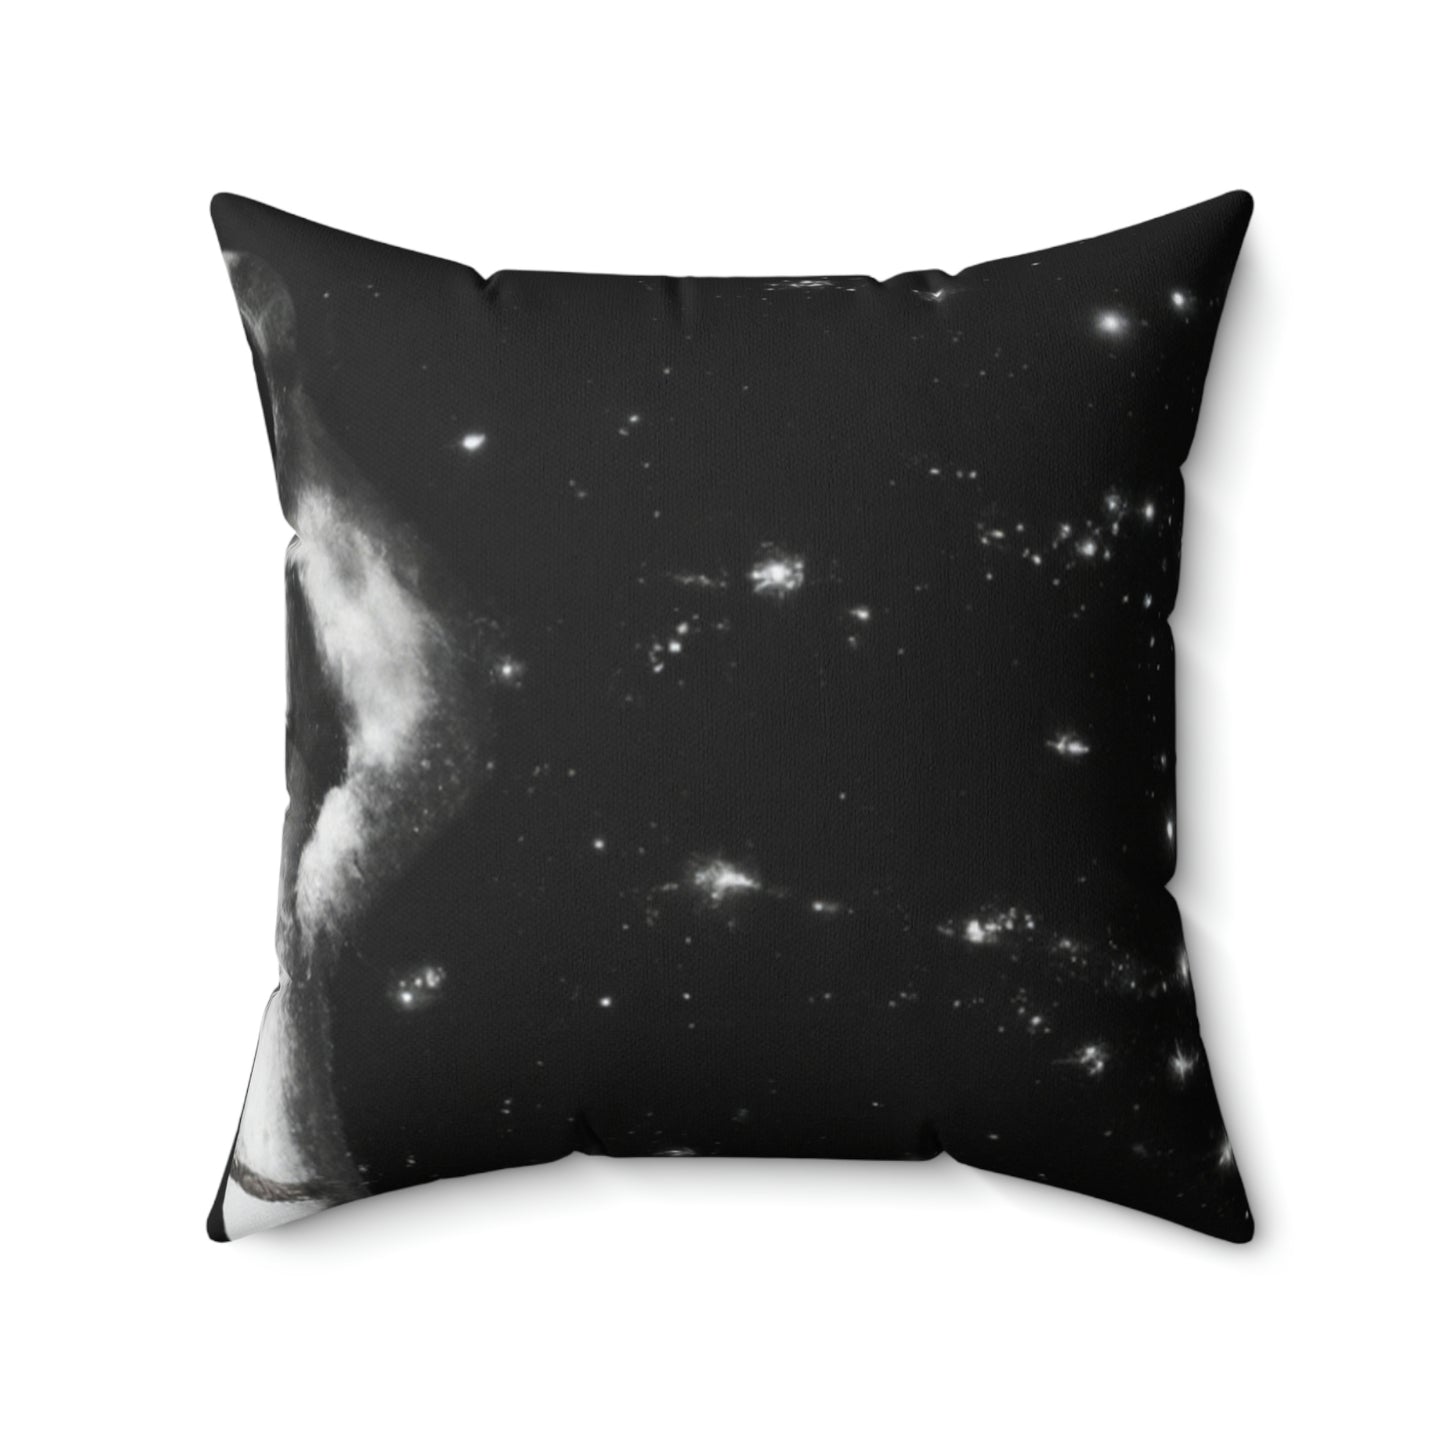 "A Celestial Sea Dance" - The Alien Square Pillow